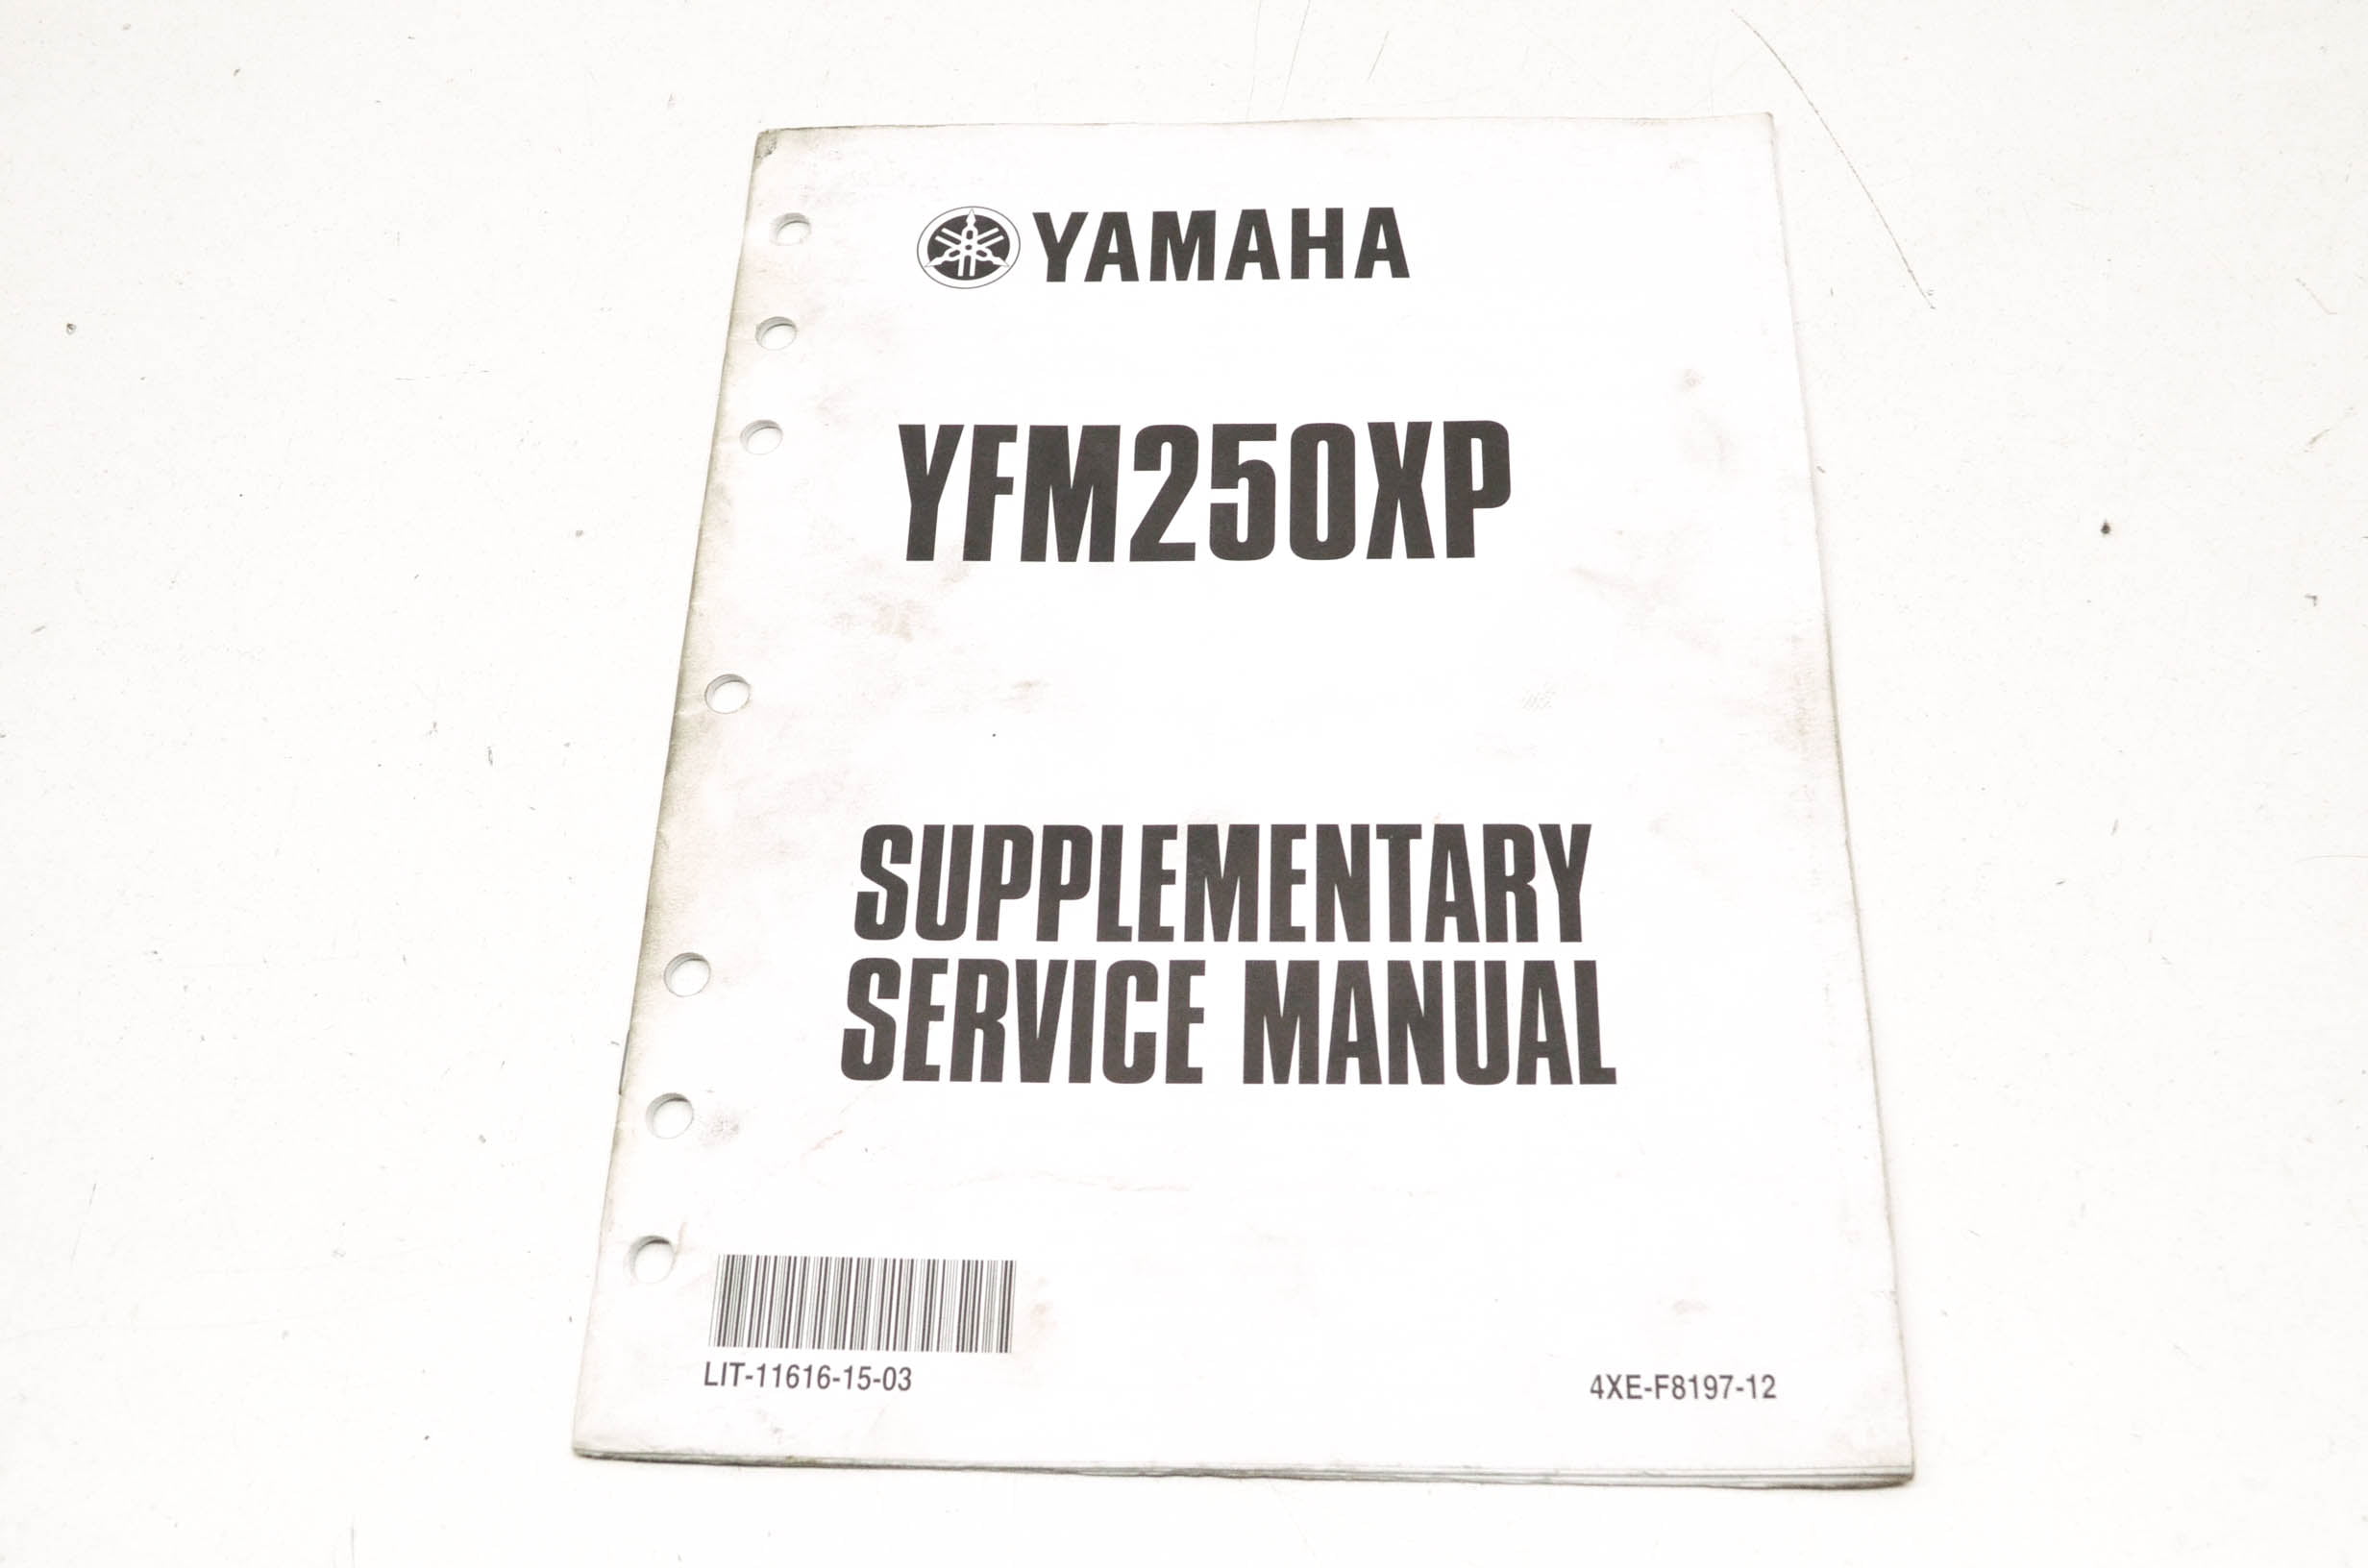 NEW Yamaha YFM250XP Supplementary Service Manual # LIT-11616-15-03 